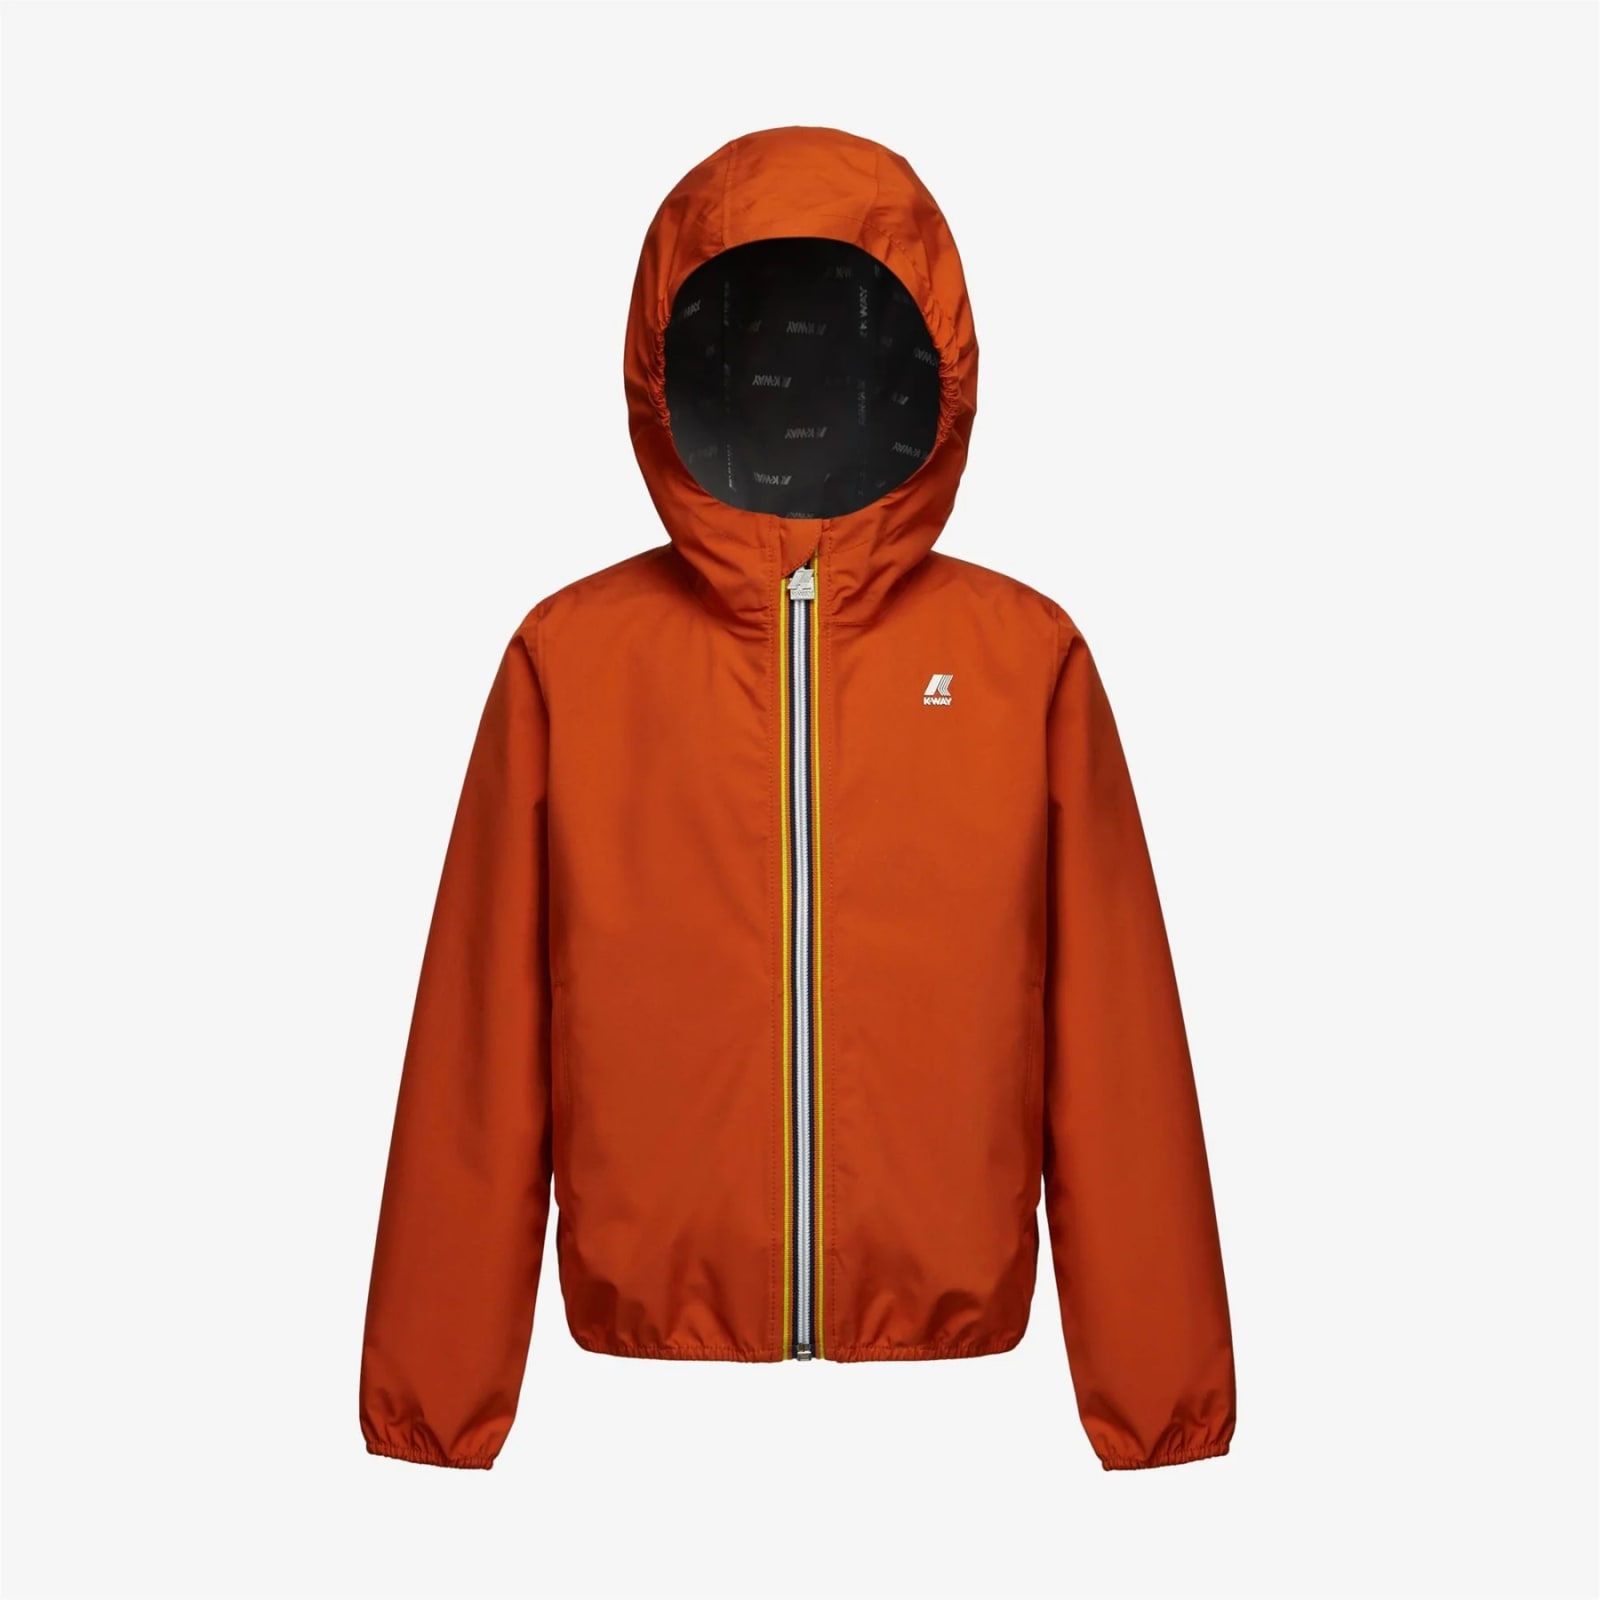 K-way Kids' Jacket With Hood In Orange